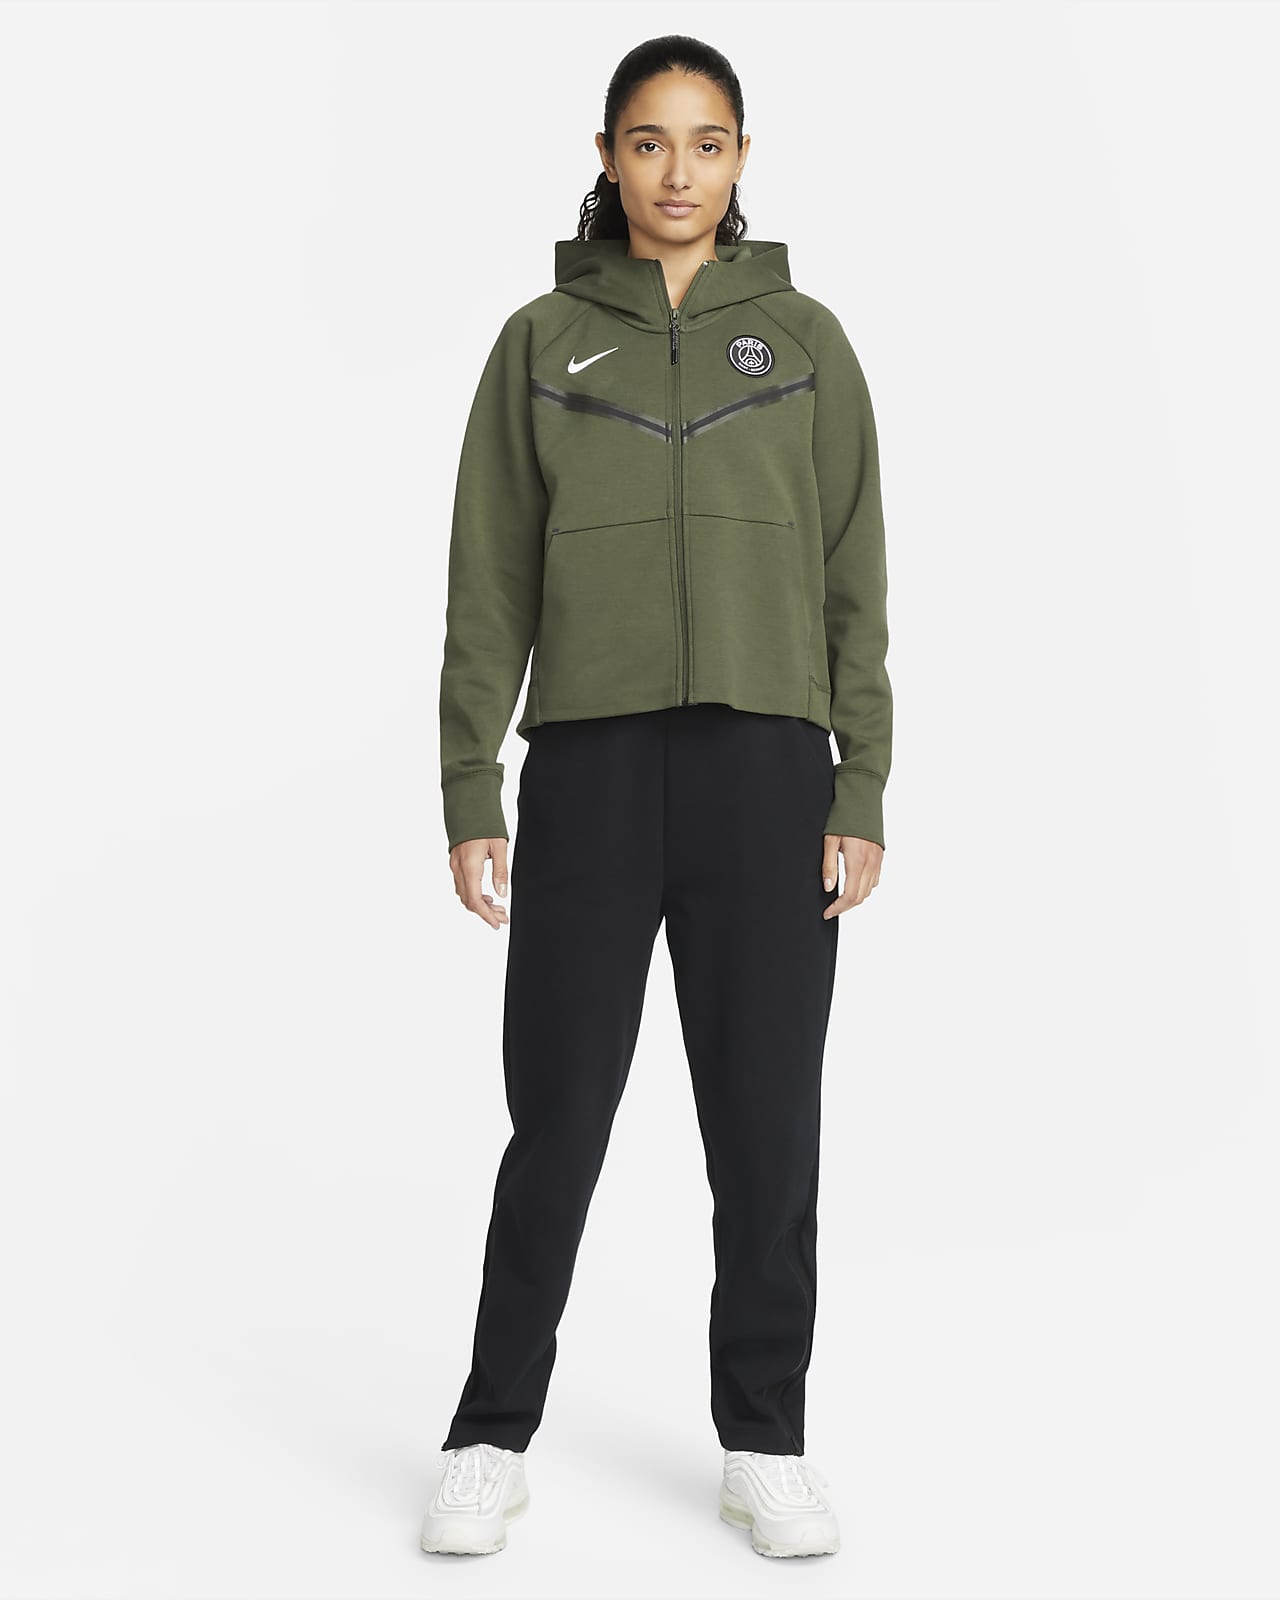 Saint-Germain Tech Fleece Windrunner con capucha y cremallera completa - Mujer. Nike ES